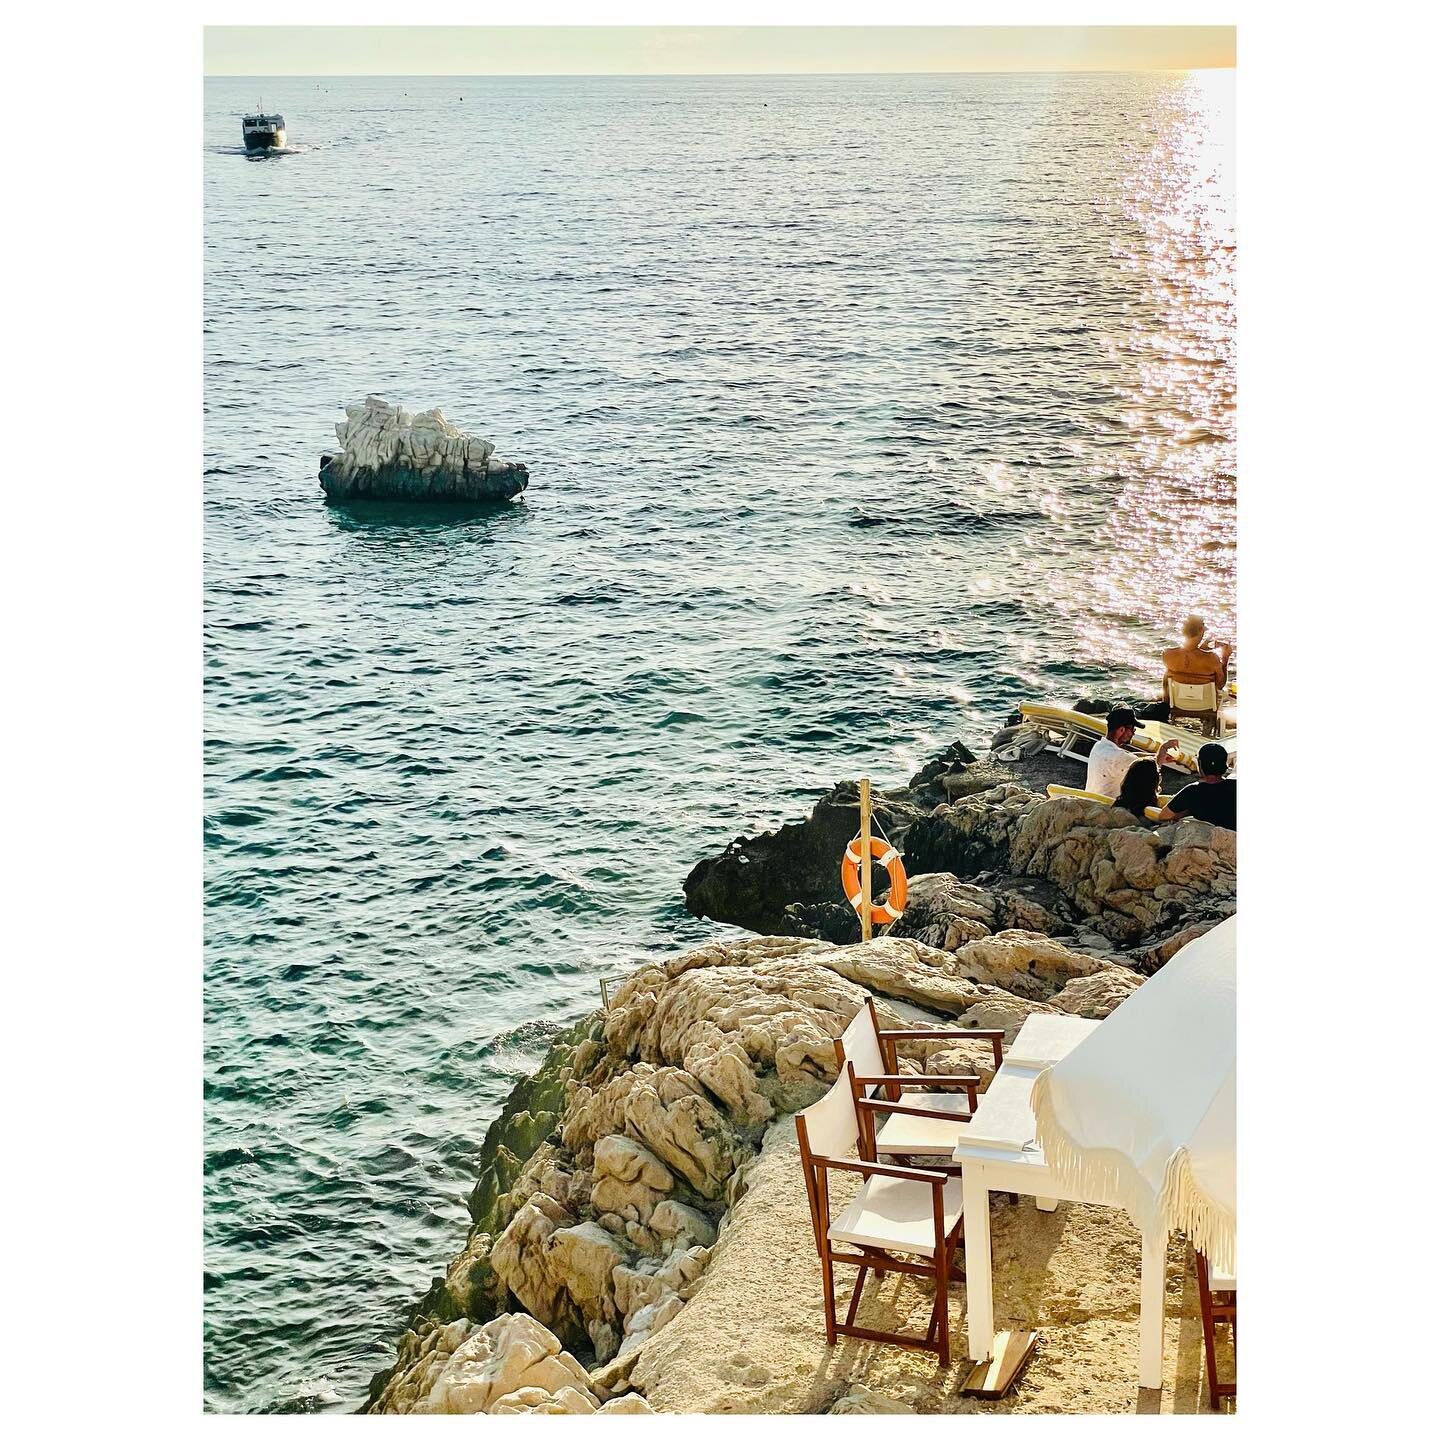 ENTRE BATEAU, ROCHER, BOU&Eacute;E &amp; CHAISES, LA MER
.
.
.
#swimming_time #beachday #aperotime #swimming #peoplephotography #summervibes #summerlife #beachlife #shadesofblue #shadesofmagic #mediterraneansea #mediterraneanlife #sealovers #tubaclub